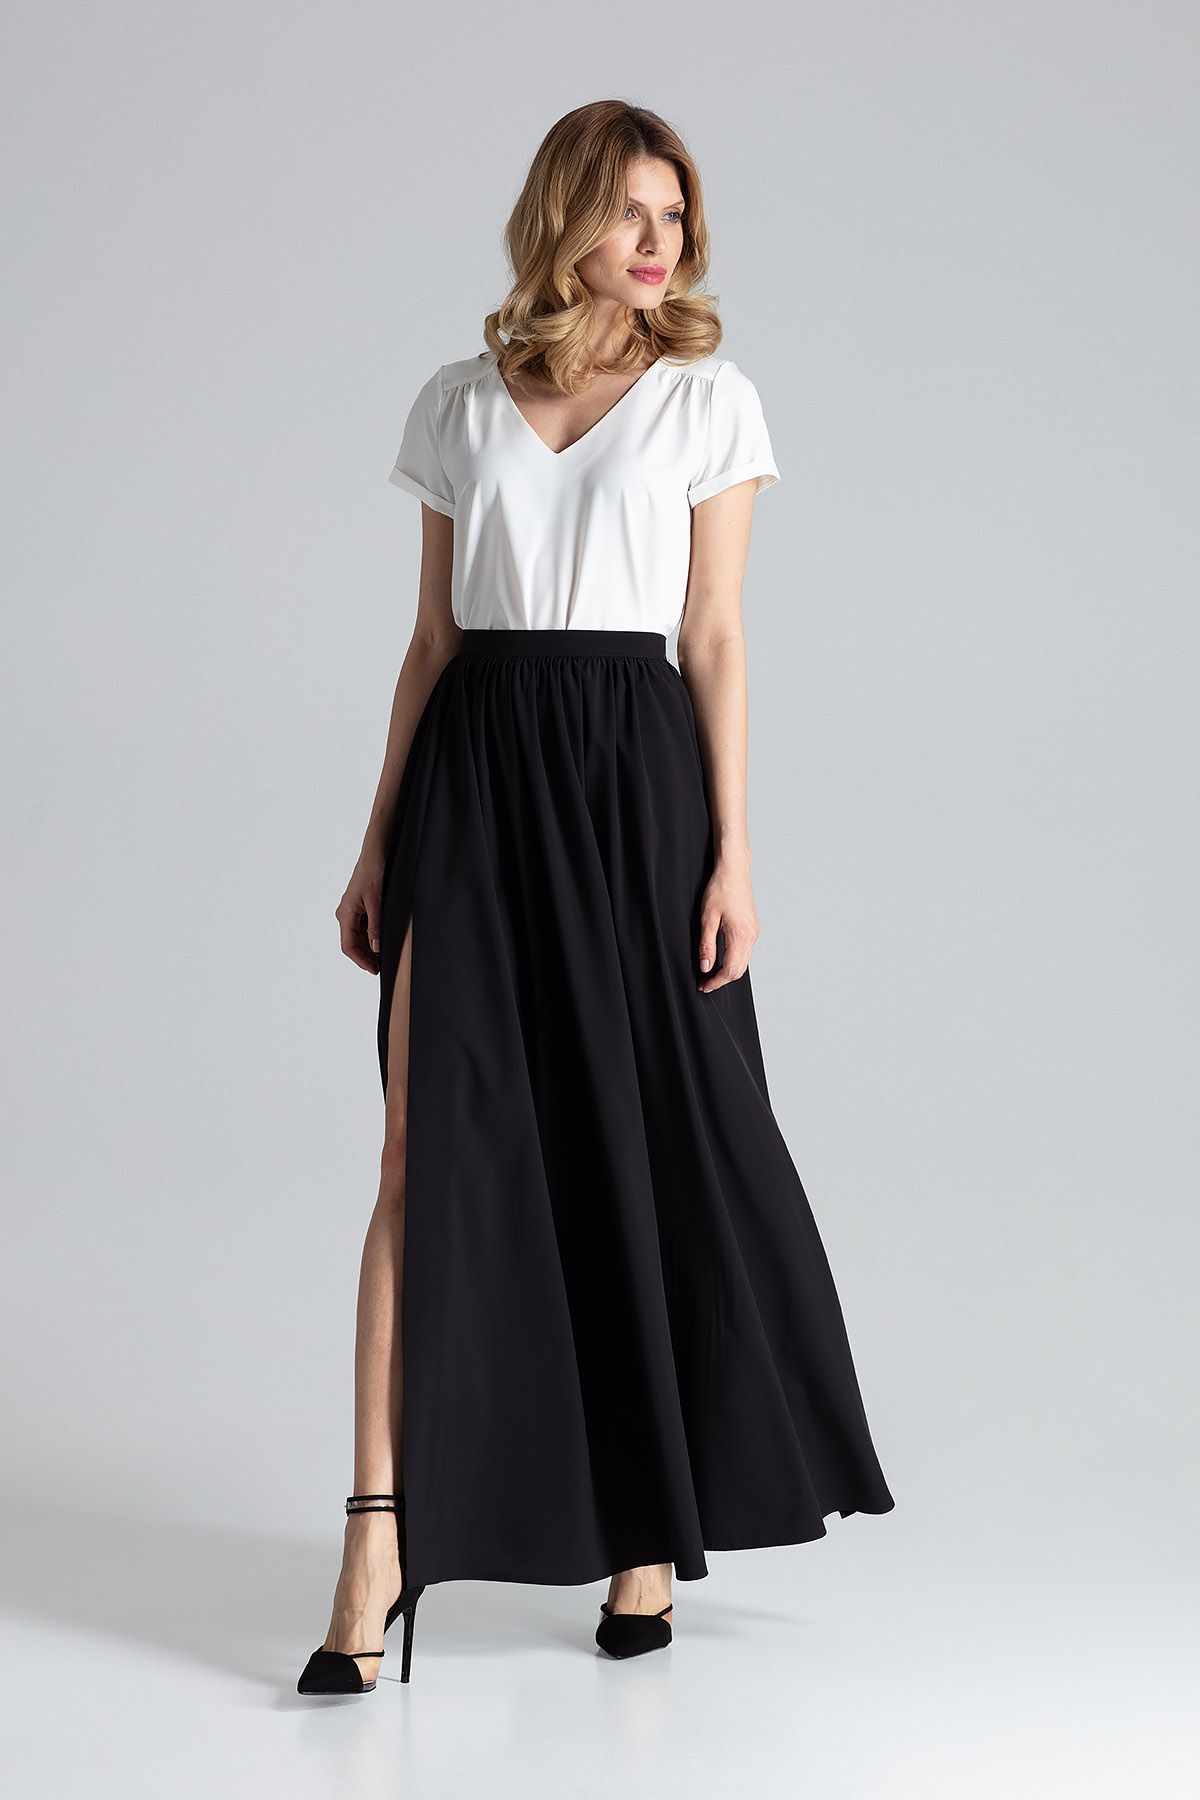 Black Maxi Wide Skirt